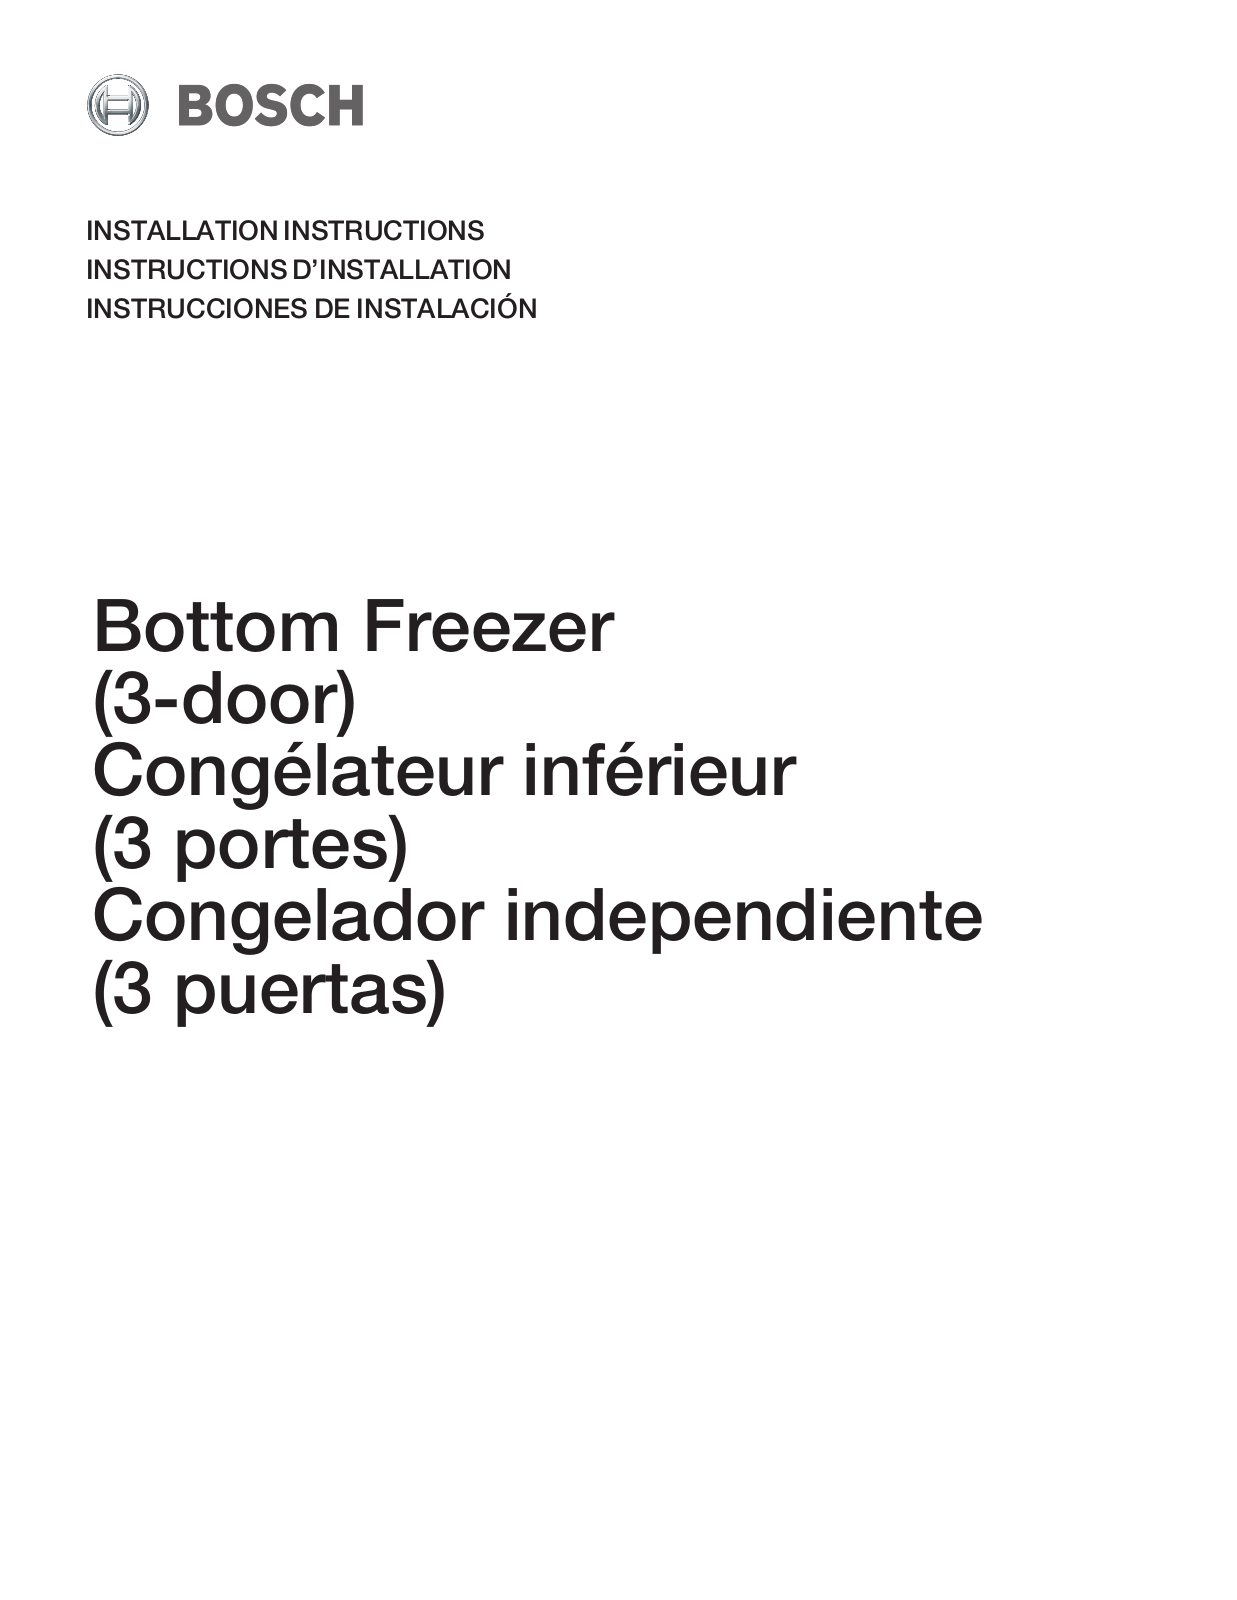 Bosch Appliances Bottom Freezer I User Manual